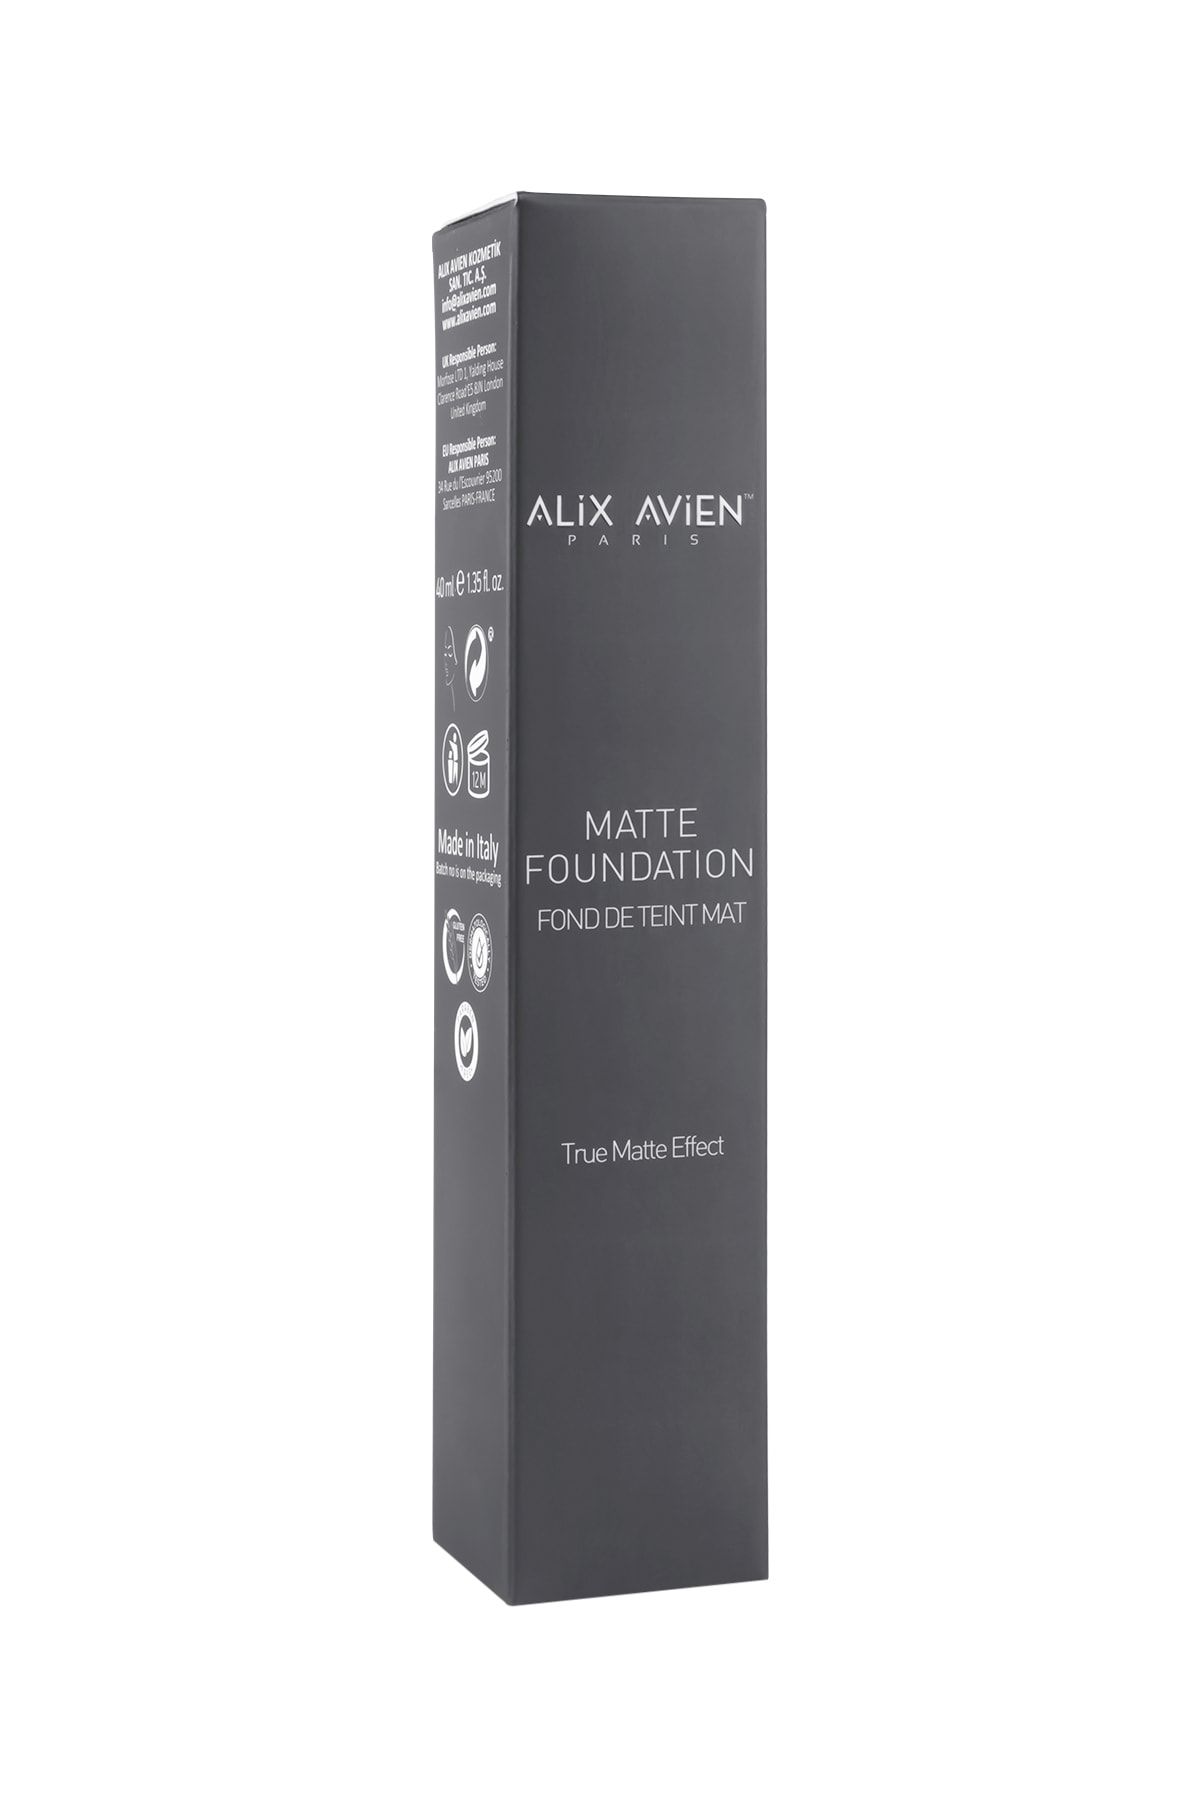 Alix Avien پایه مات 402 اوکر بژ با پوشش بالا و اثر دائمی طولانی مدت